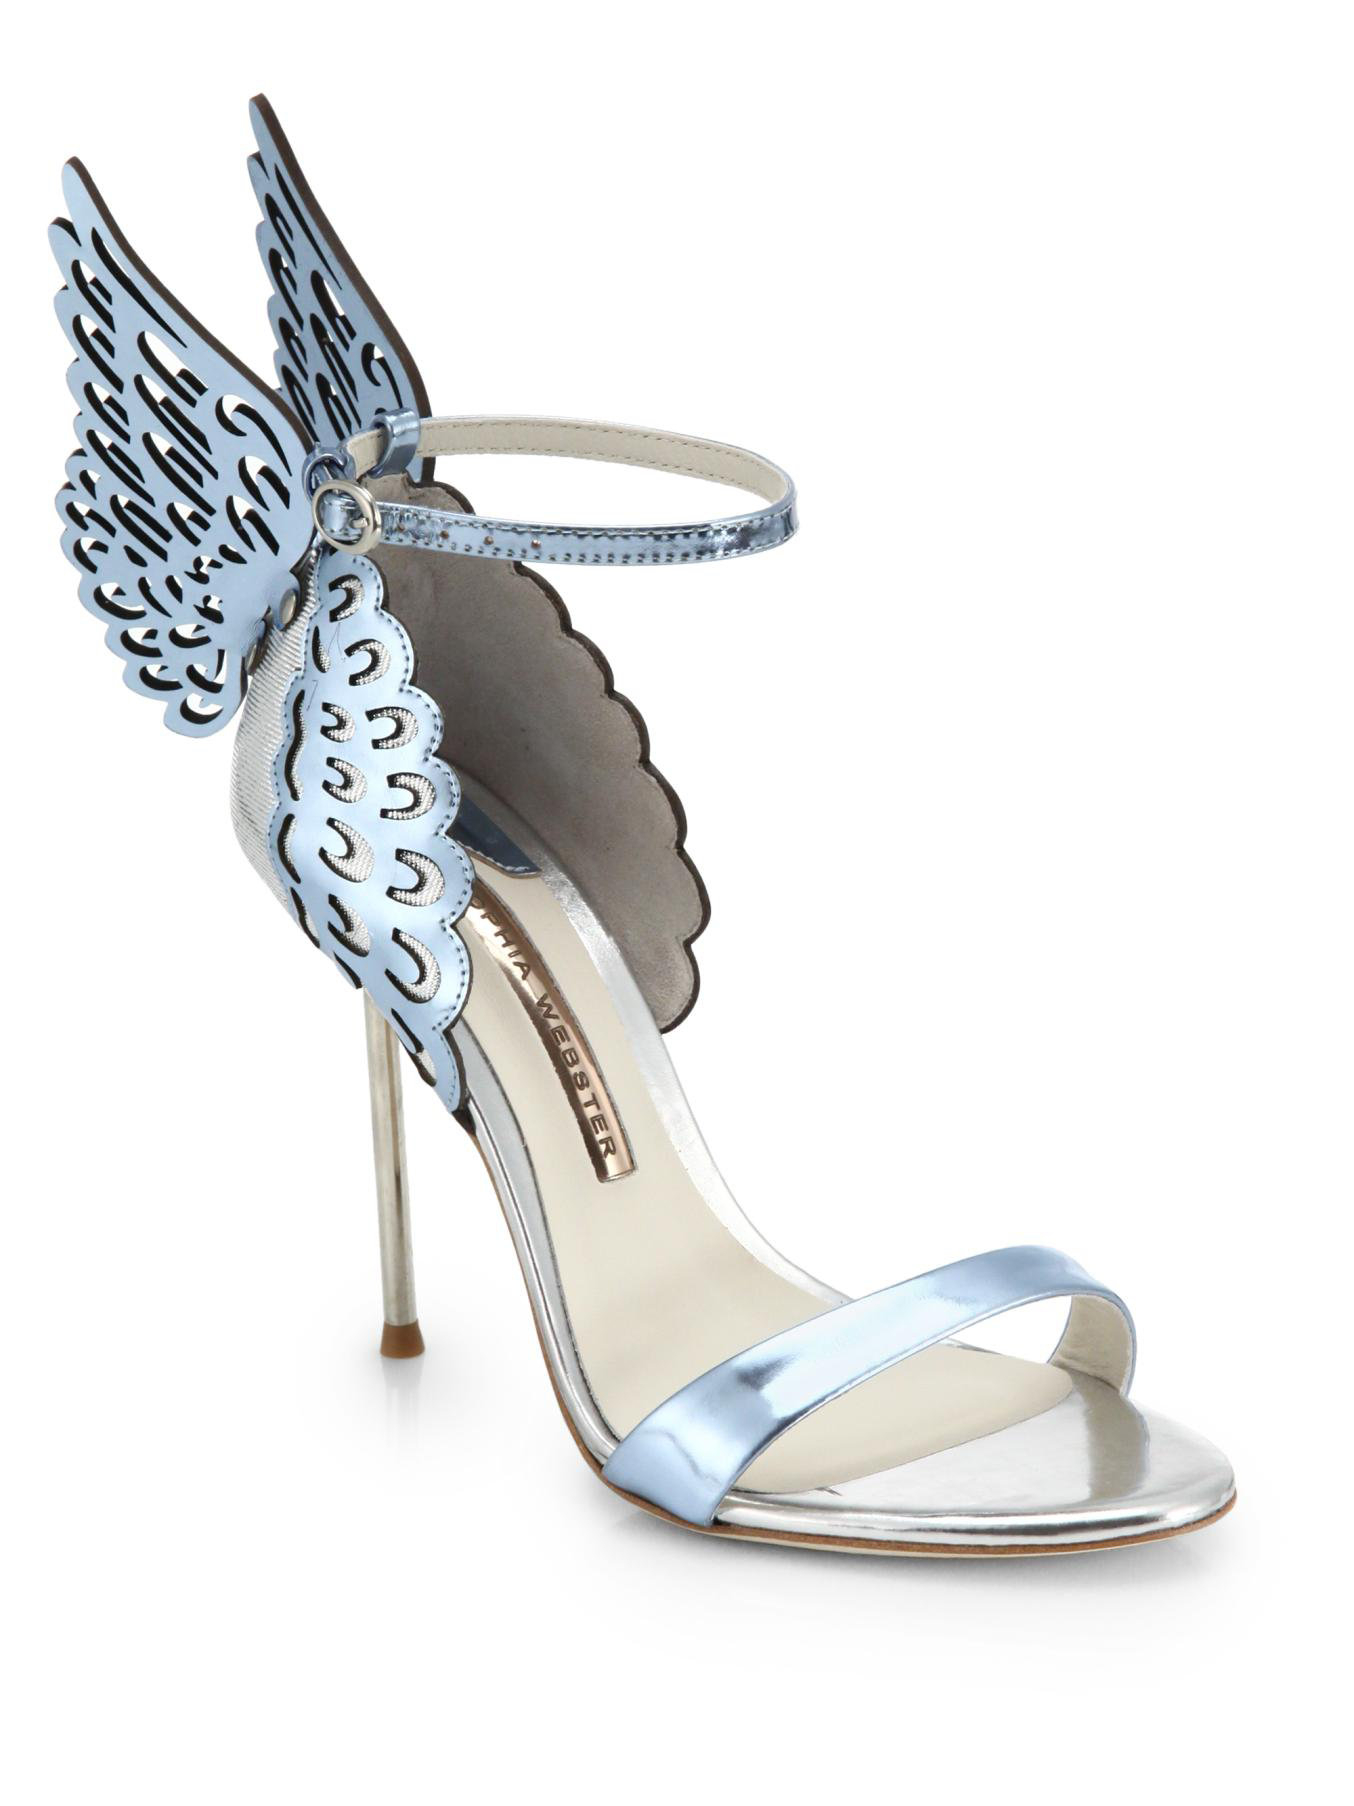 Sophia webster Evangeline Winged Leather Sandals in Blue | Lyst